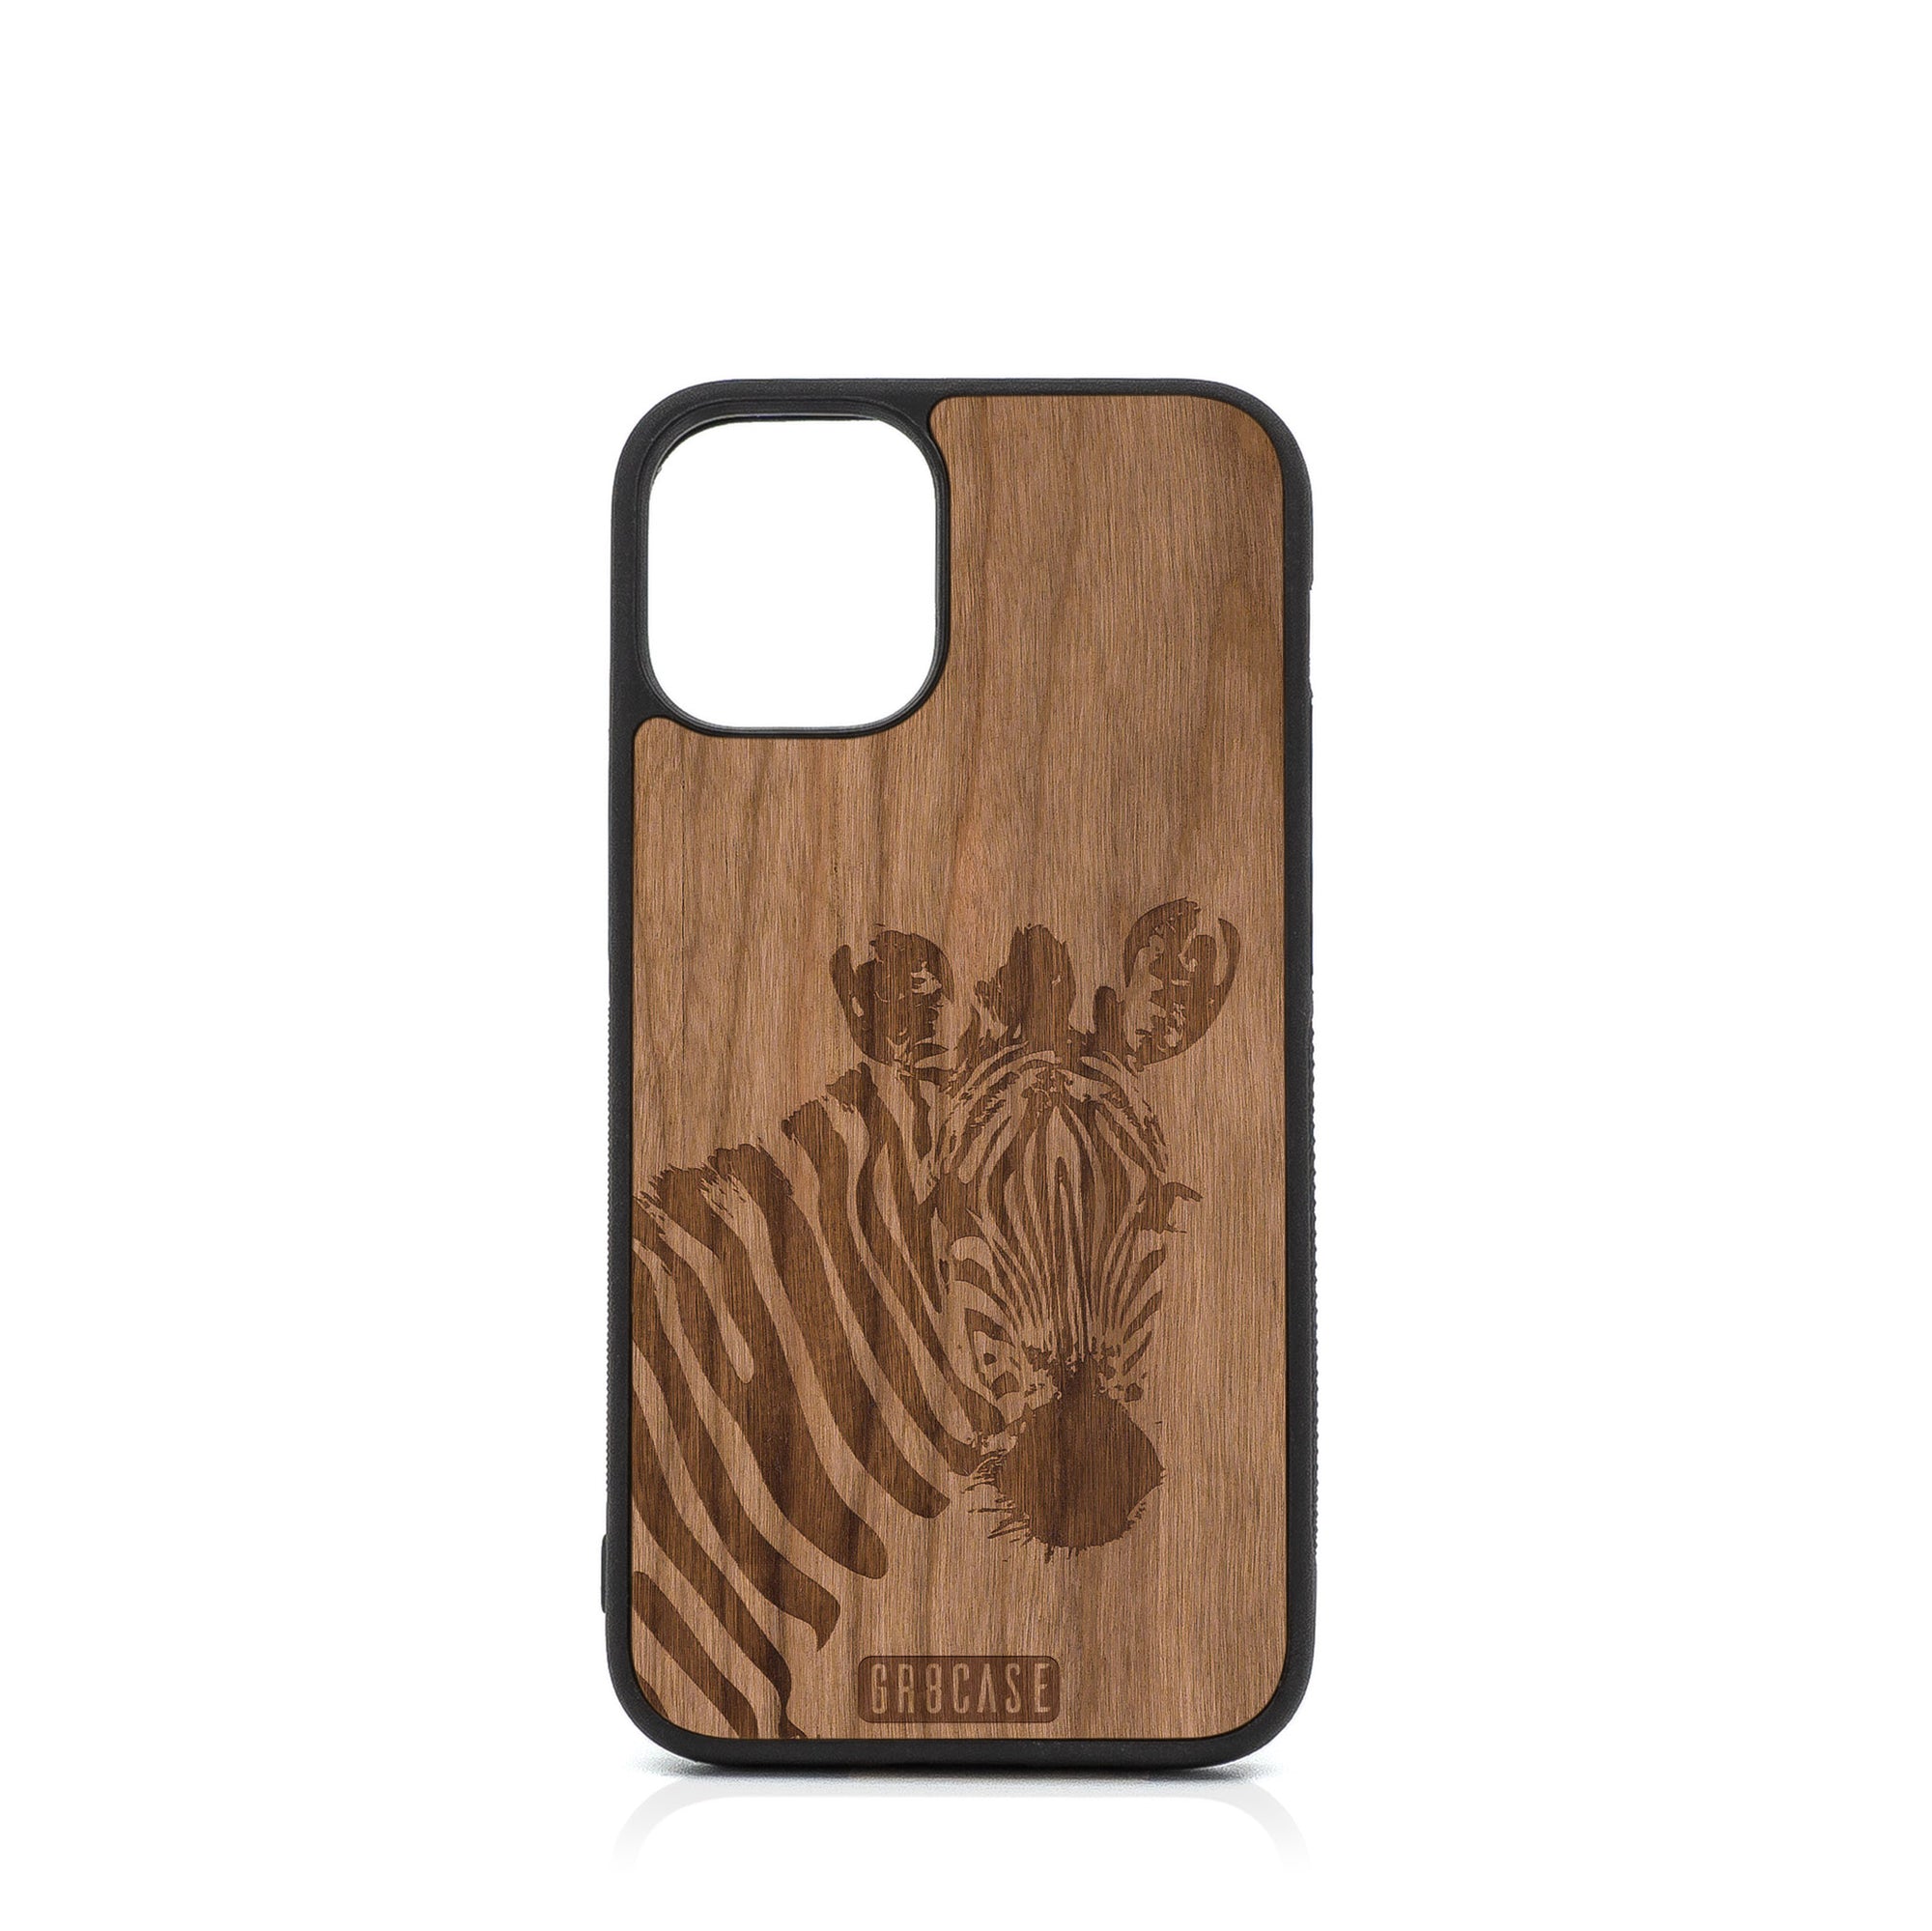 Lookout Zebra Design Wood Case For iPhone 12 Mini